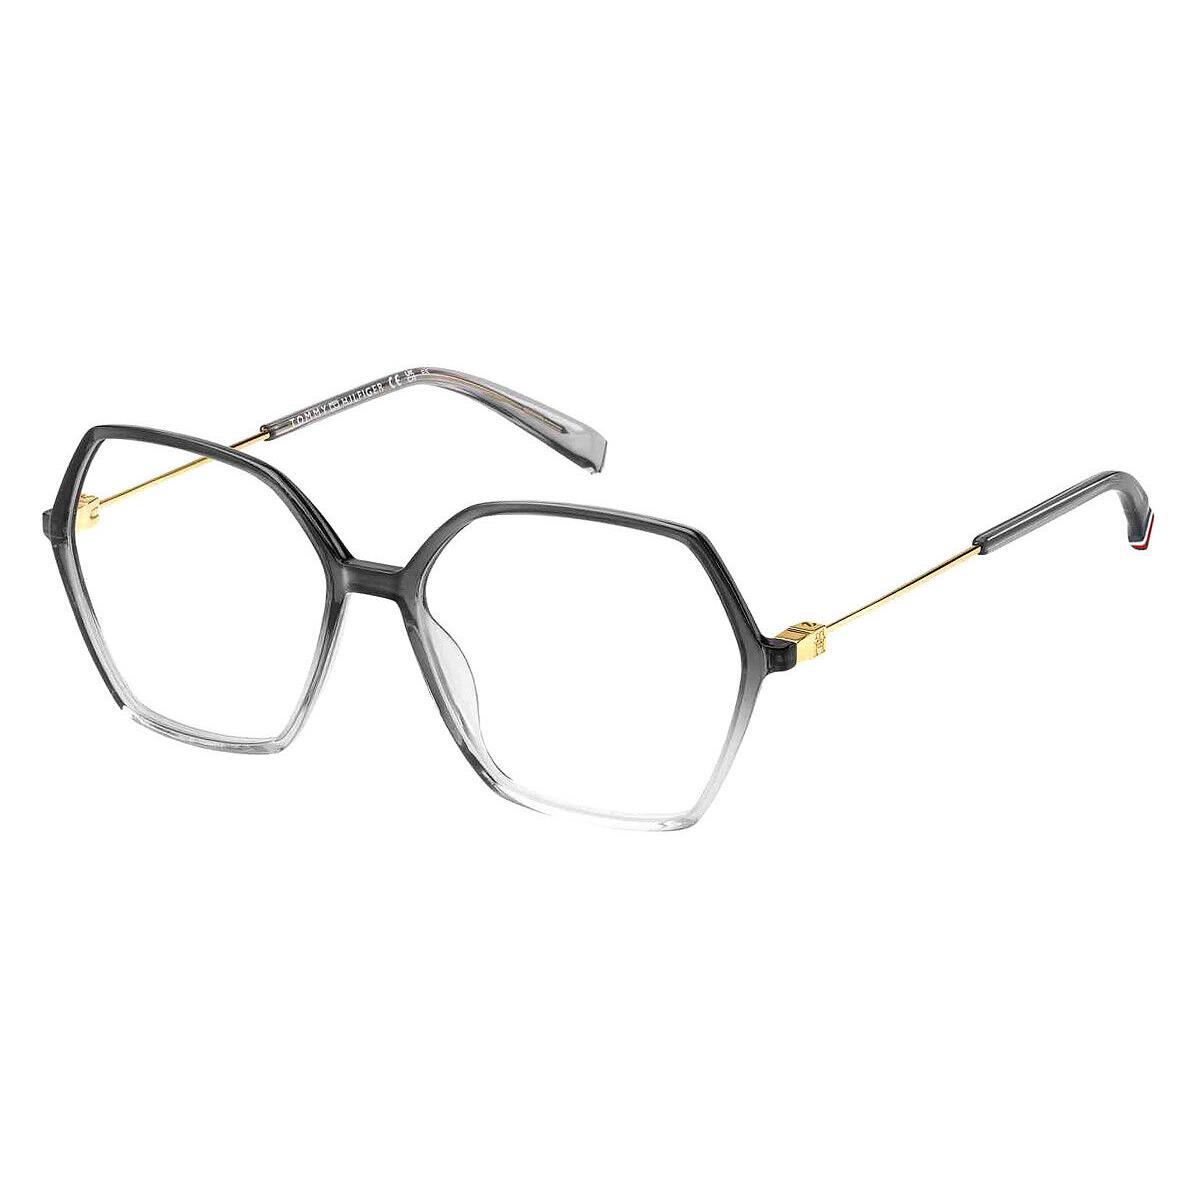 Tommy Hilfiger Thf Eyeglasses Women Gray 55mm - Frame: Gray, Lens: Demo